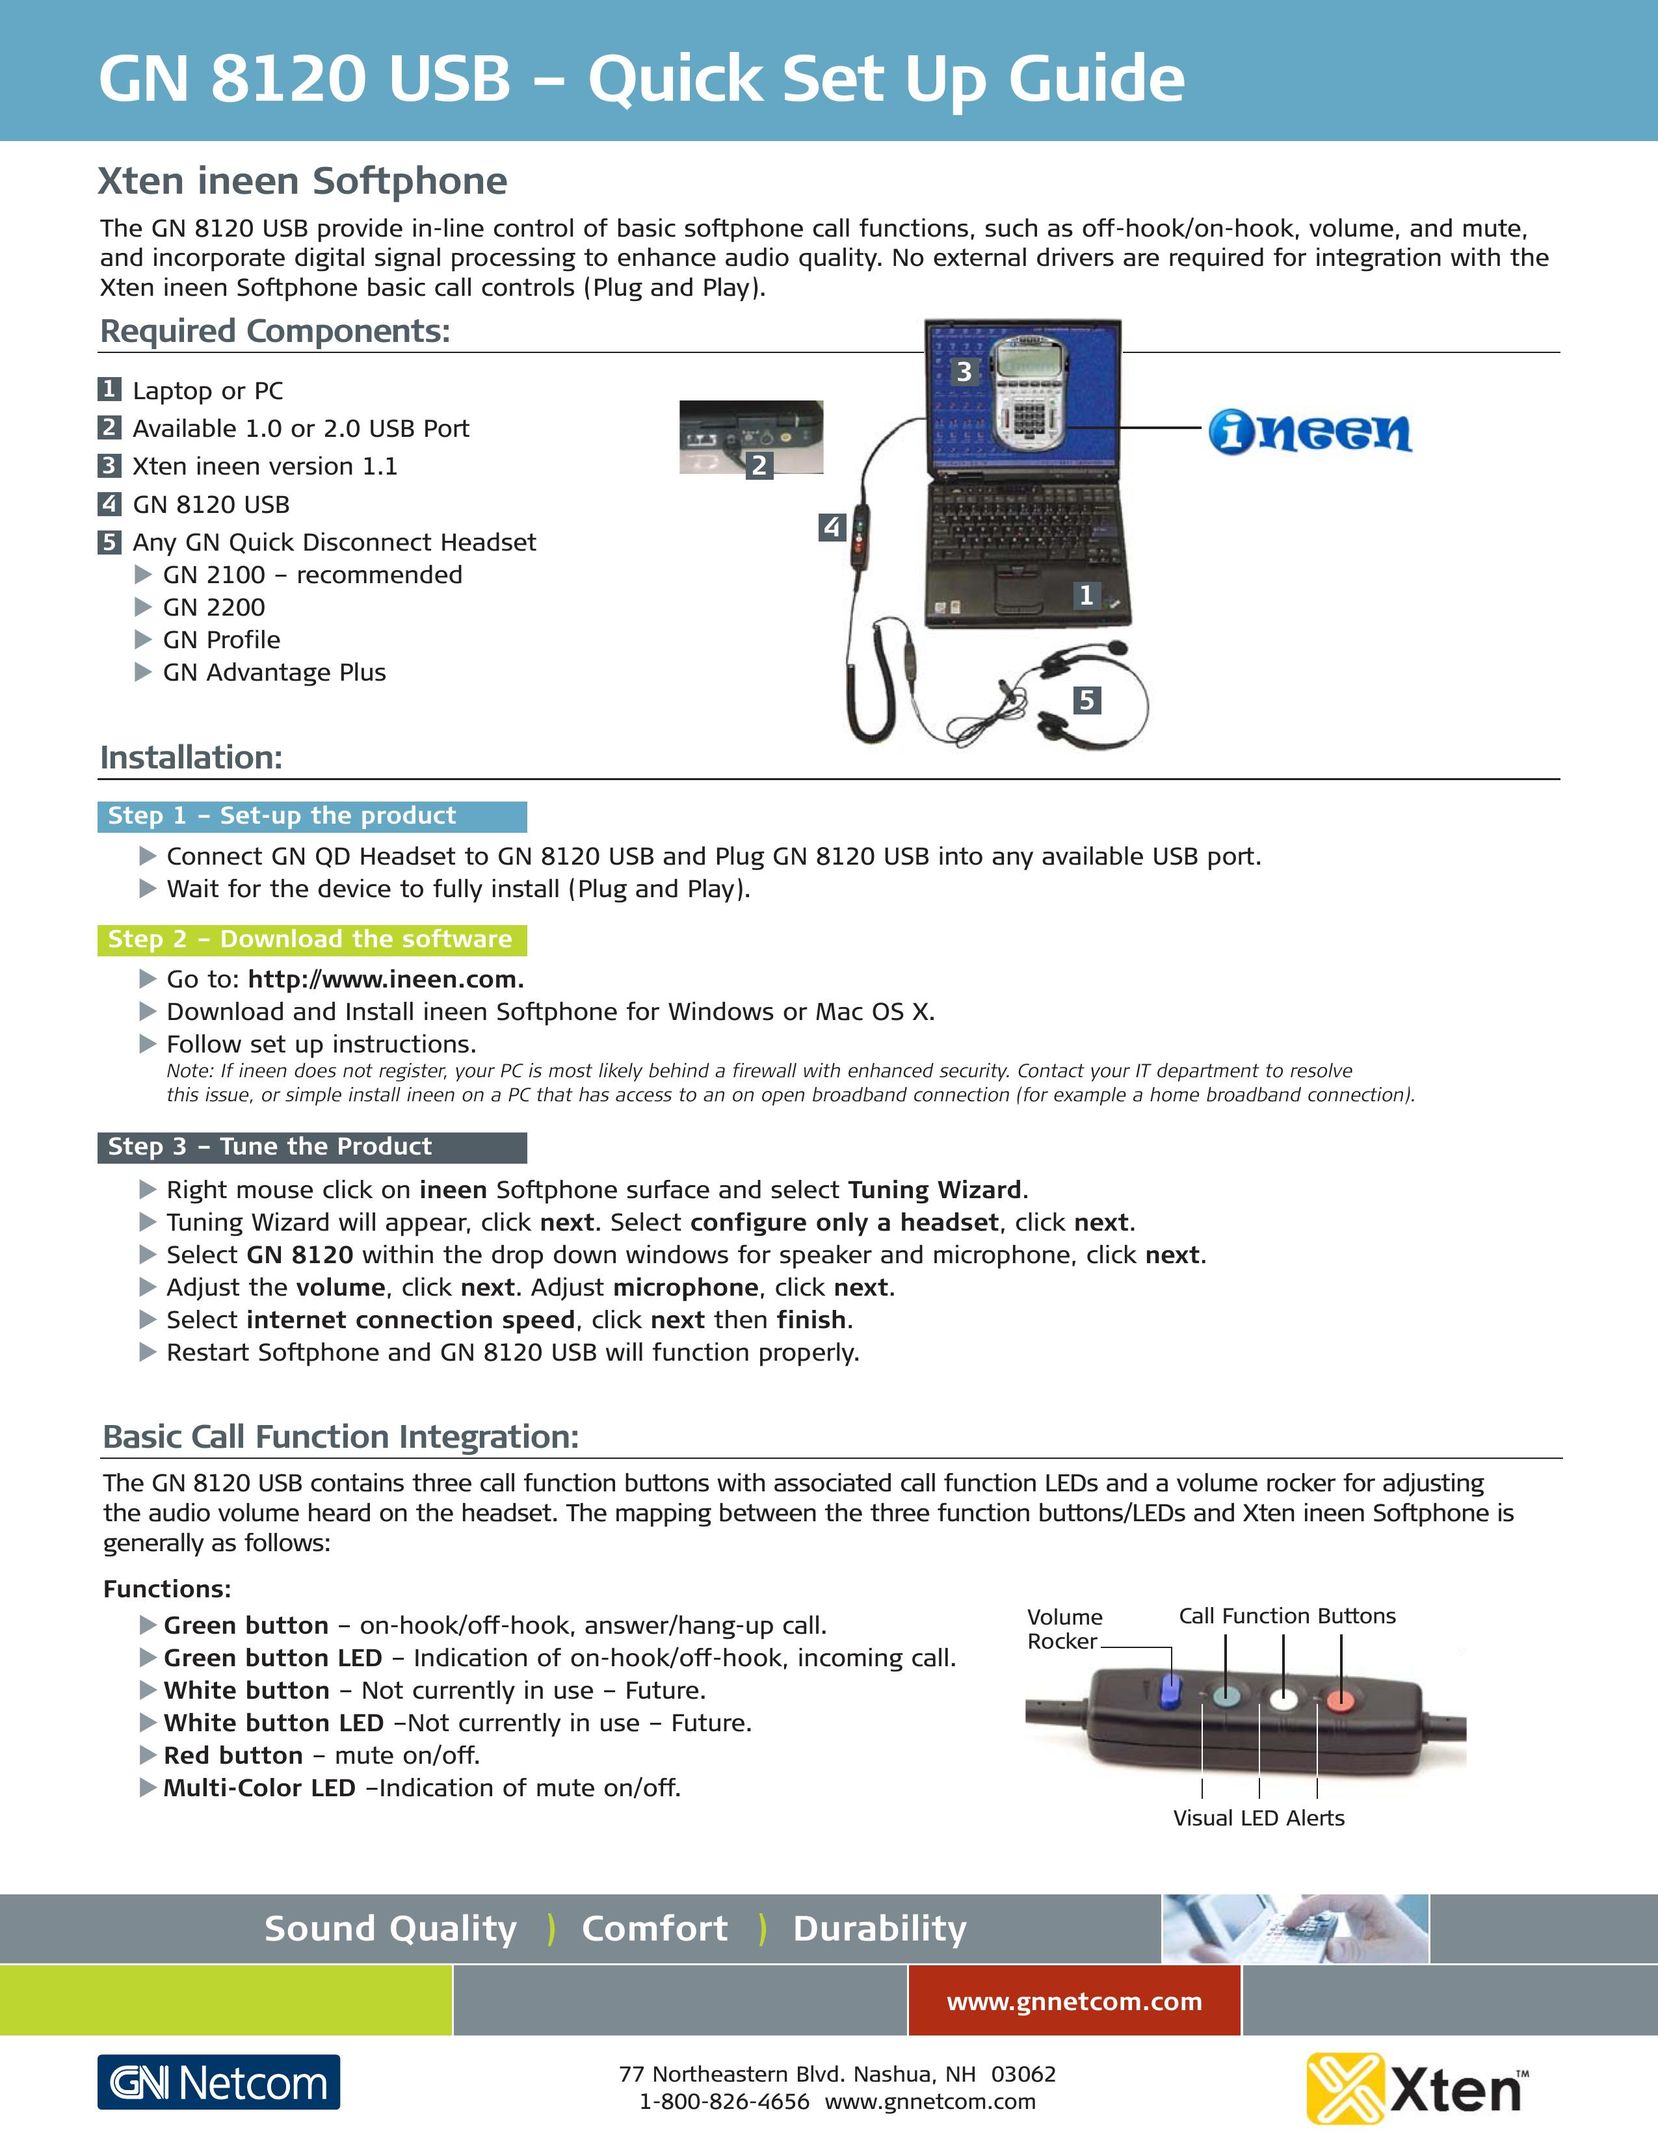 GN Netcom GN 8120 USB Computer Accessories User Manual